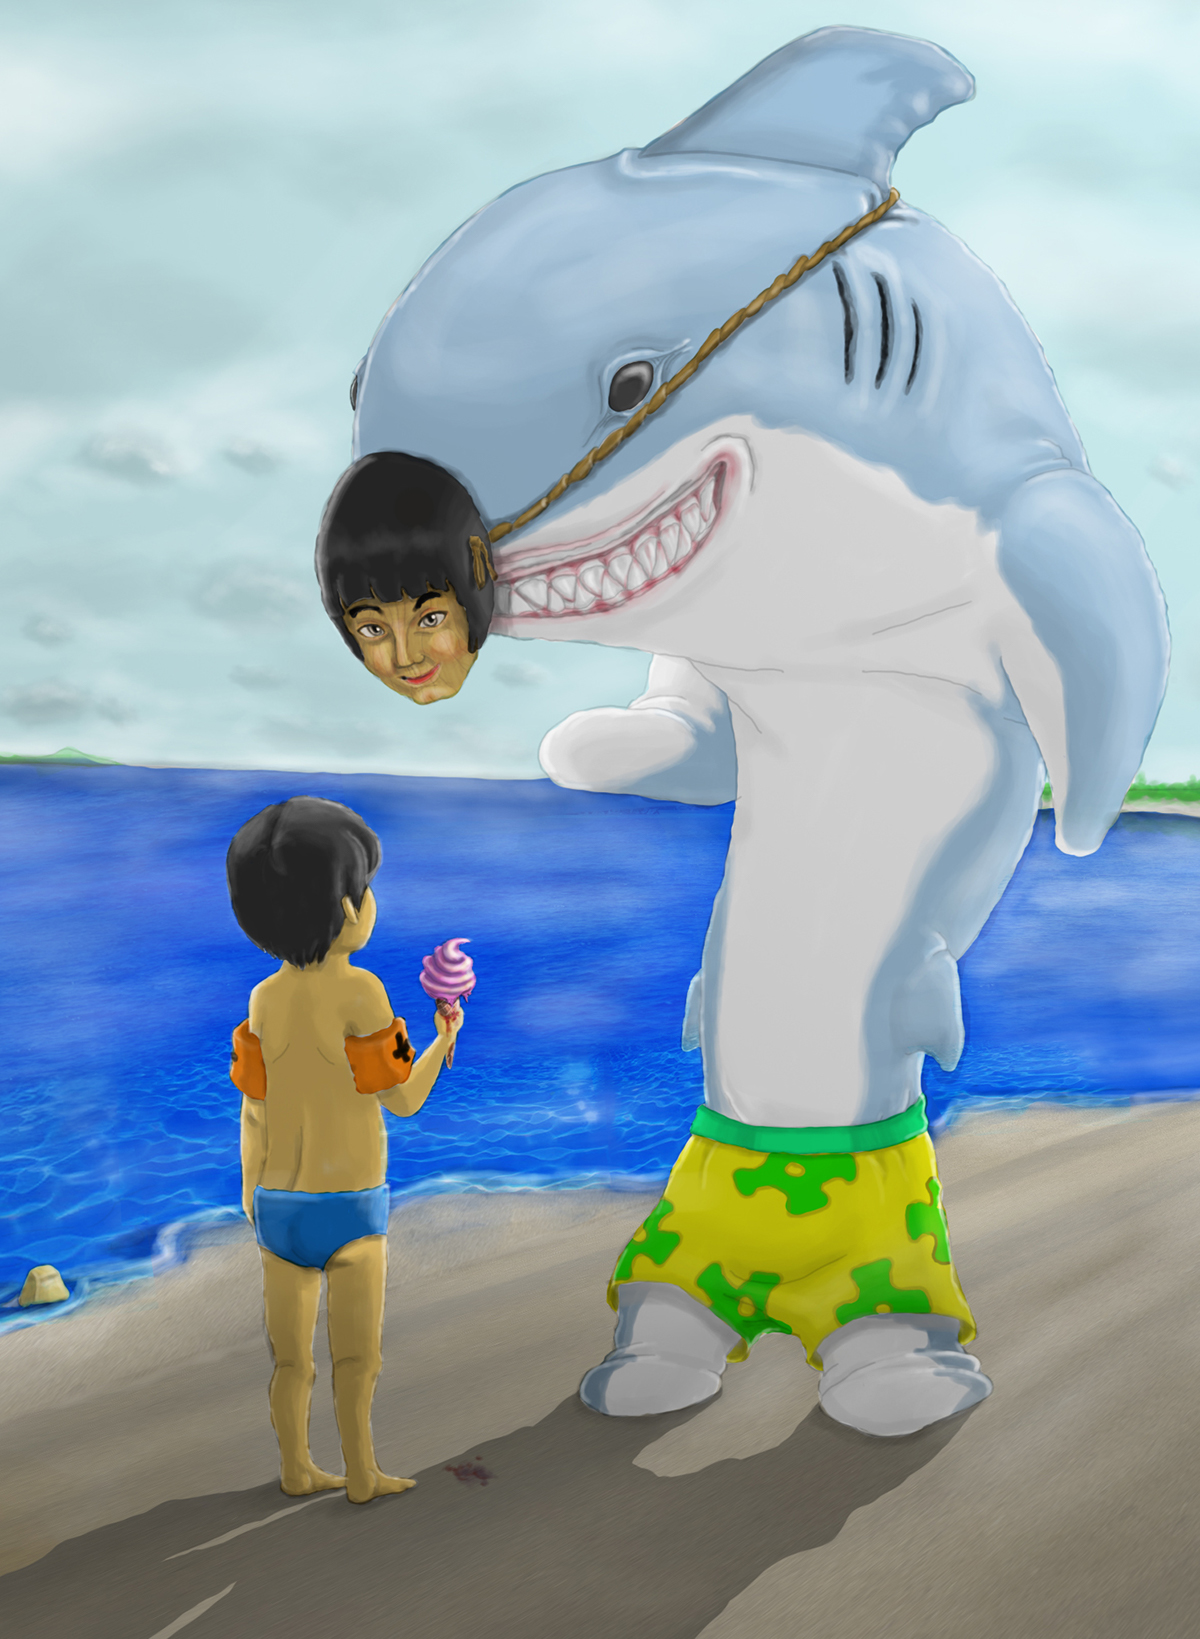 sharks shark concept art concept art kid icecream boy beach harris destacamento blue SKY